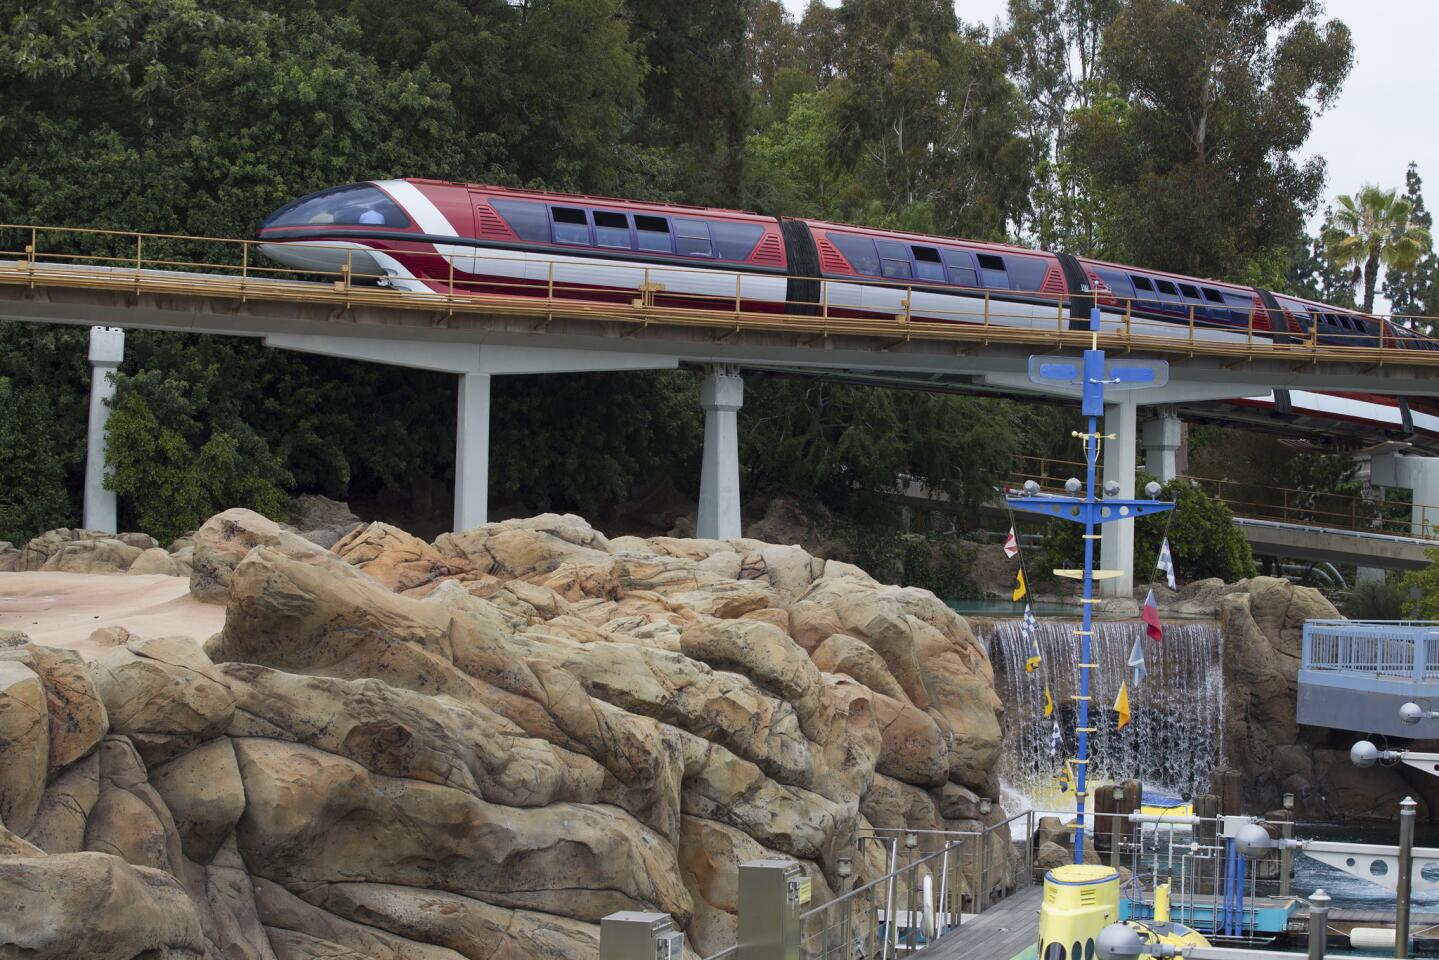 Monorail at Disneyland